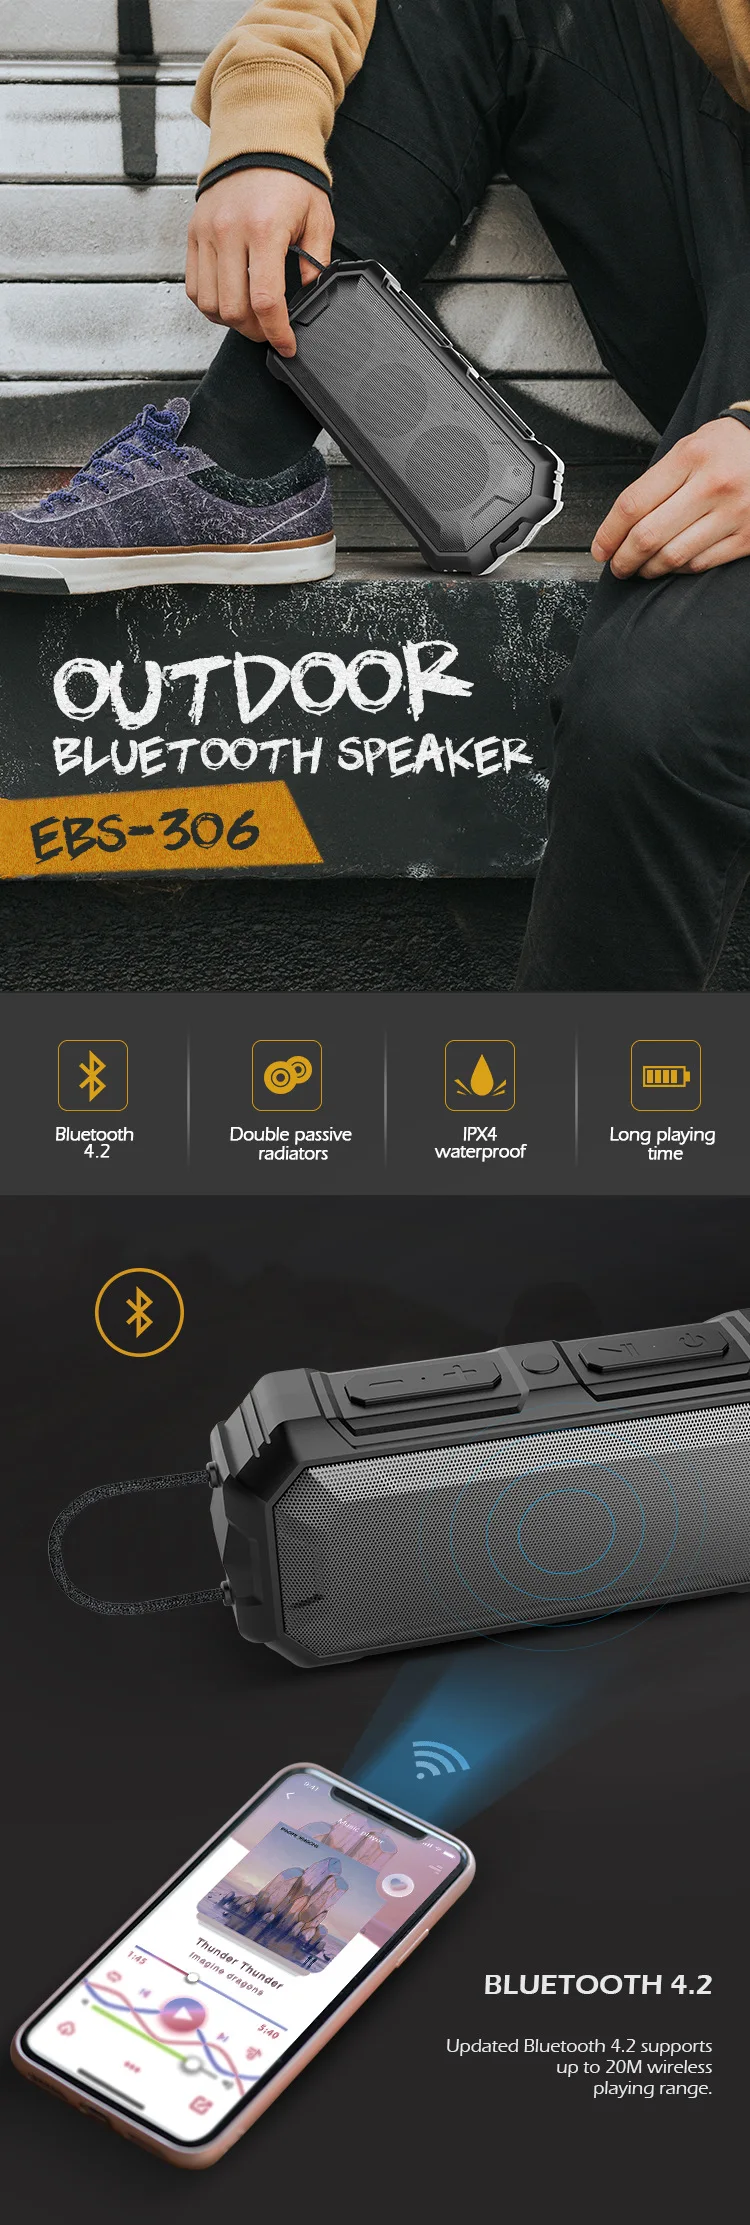 Subwoofer Bluetooth Loudspeaker Column Stereo Outdoor Portable Wireless EBS-306